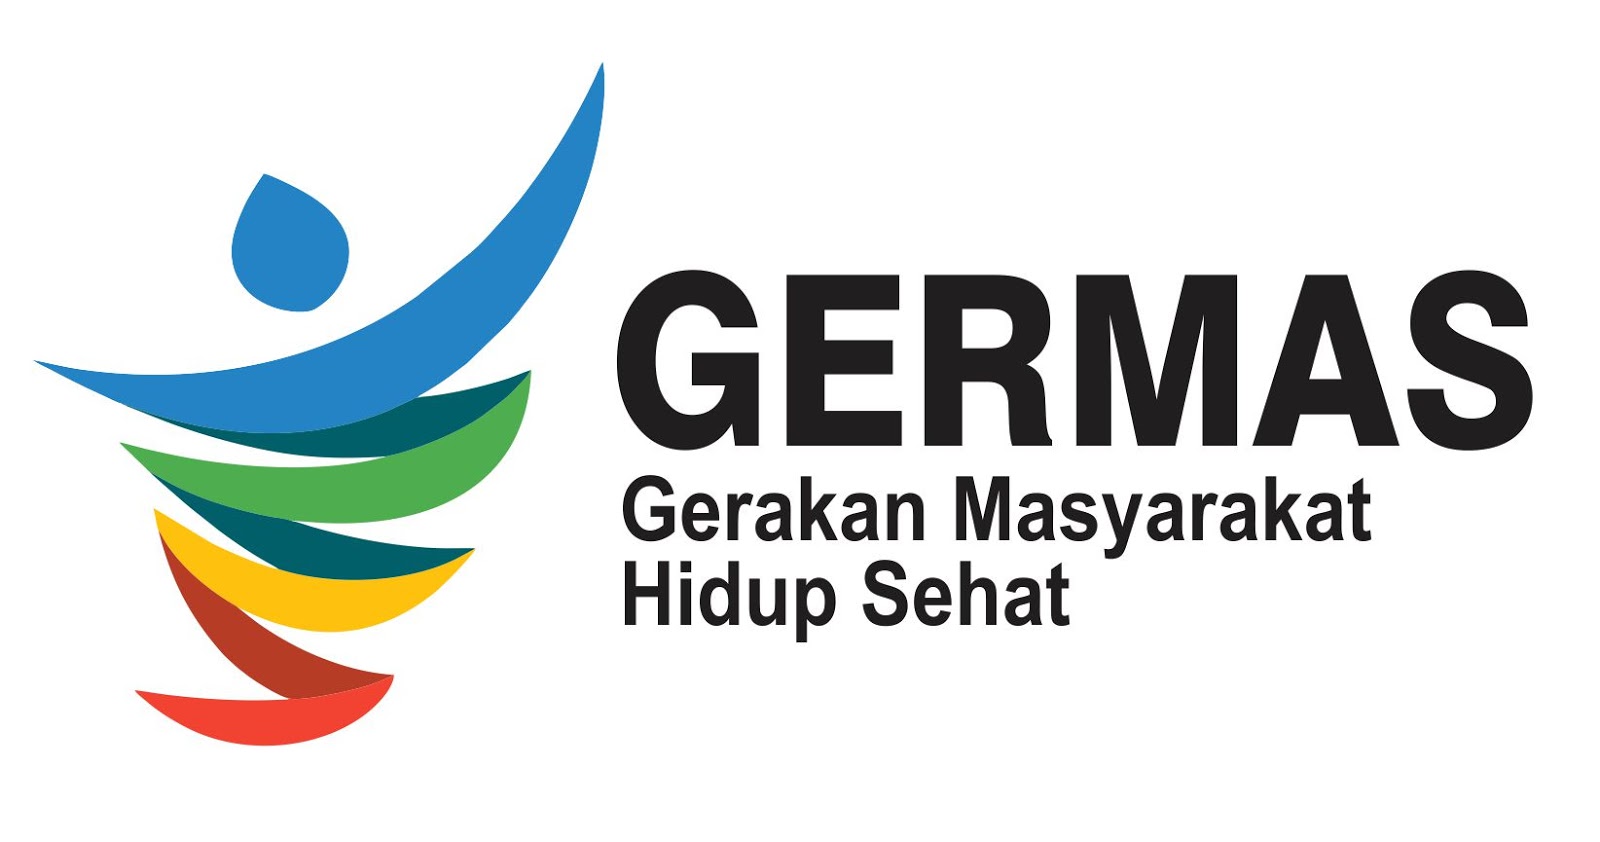 Mengenal Makna Logo Germas